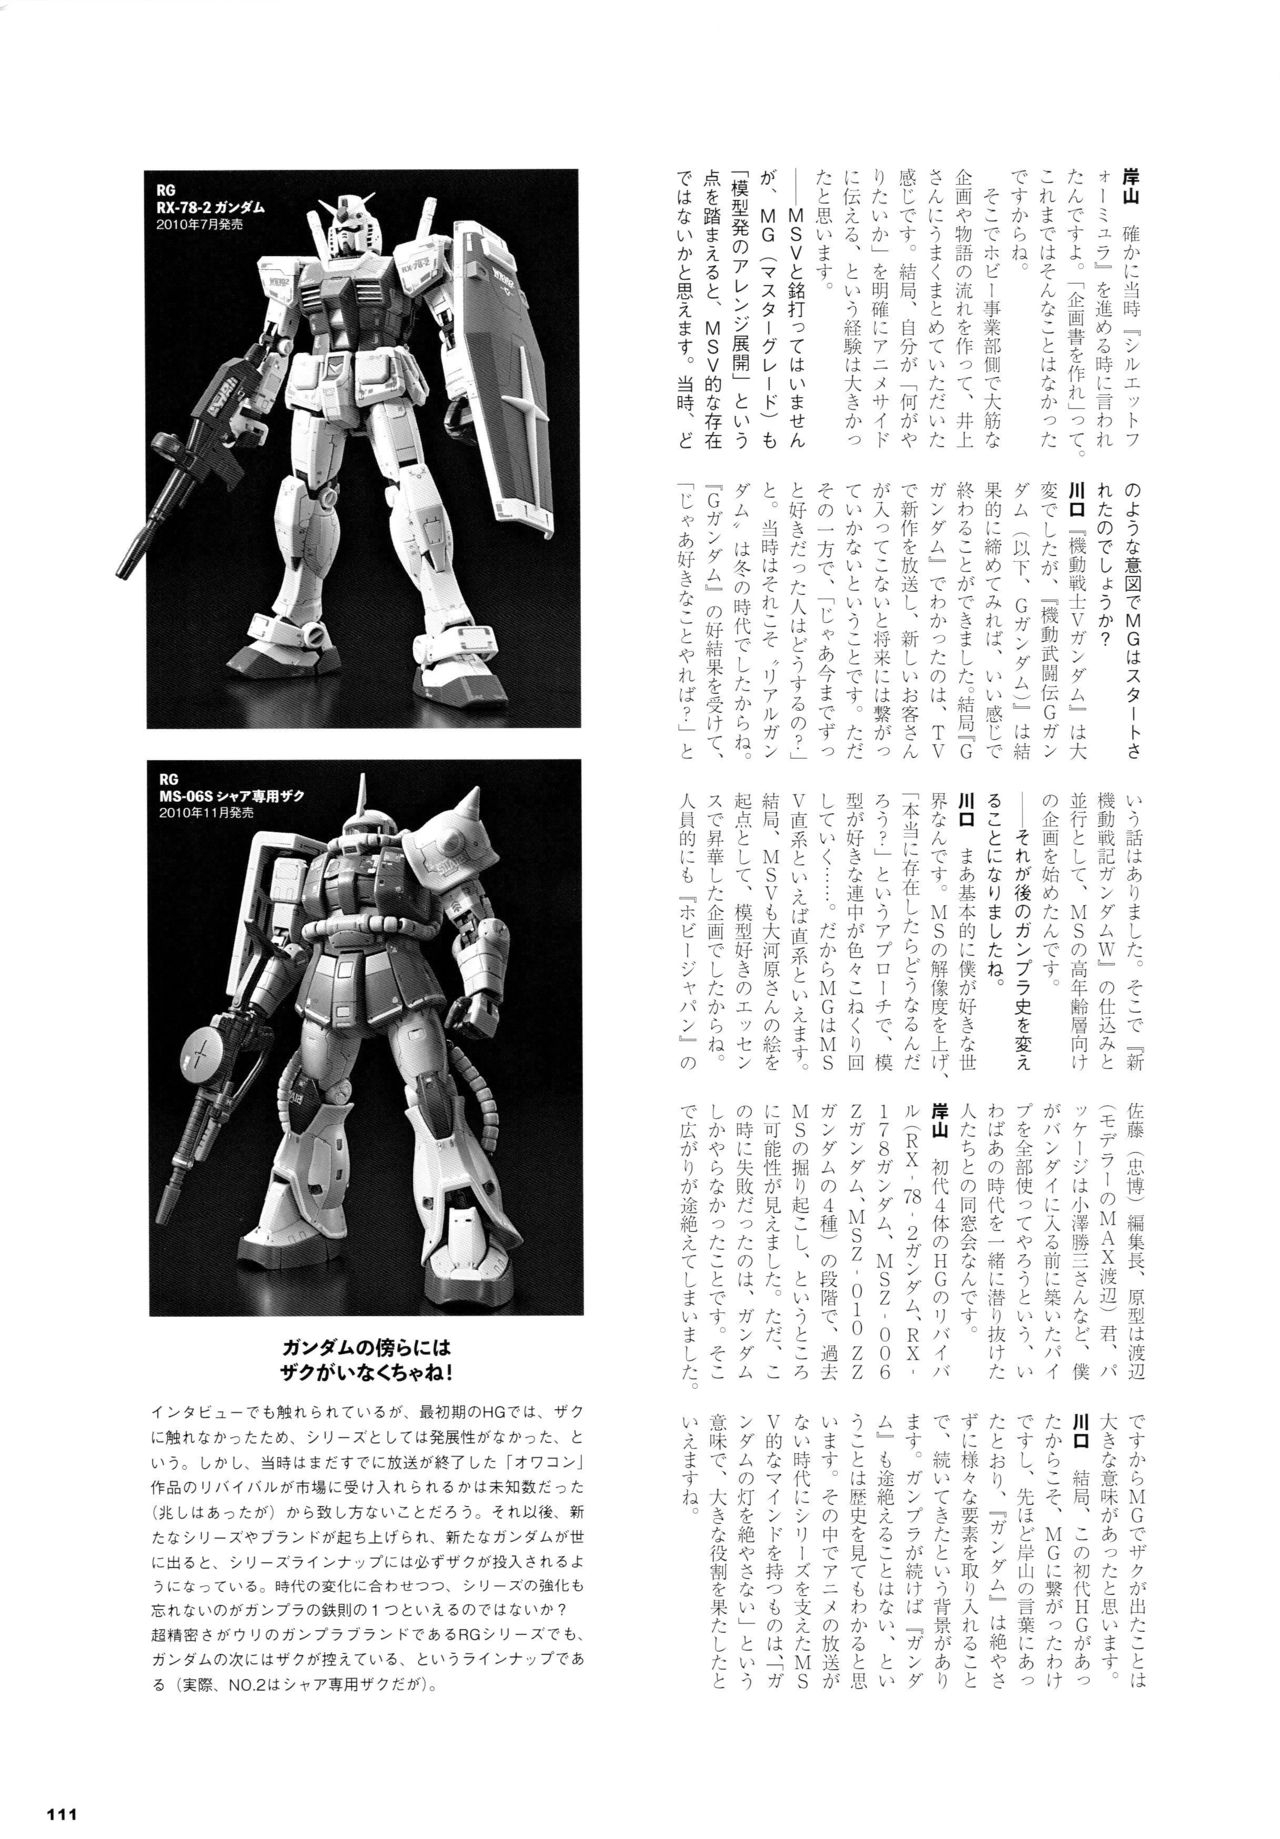 Mobile Suit Gundam - MSV The Second - Generation 1986-1993 110